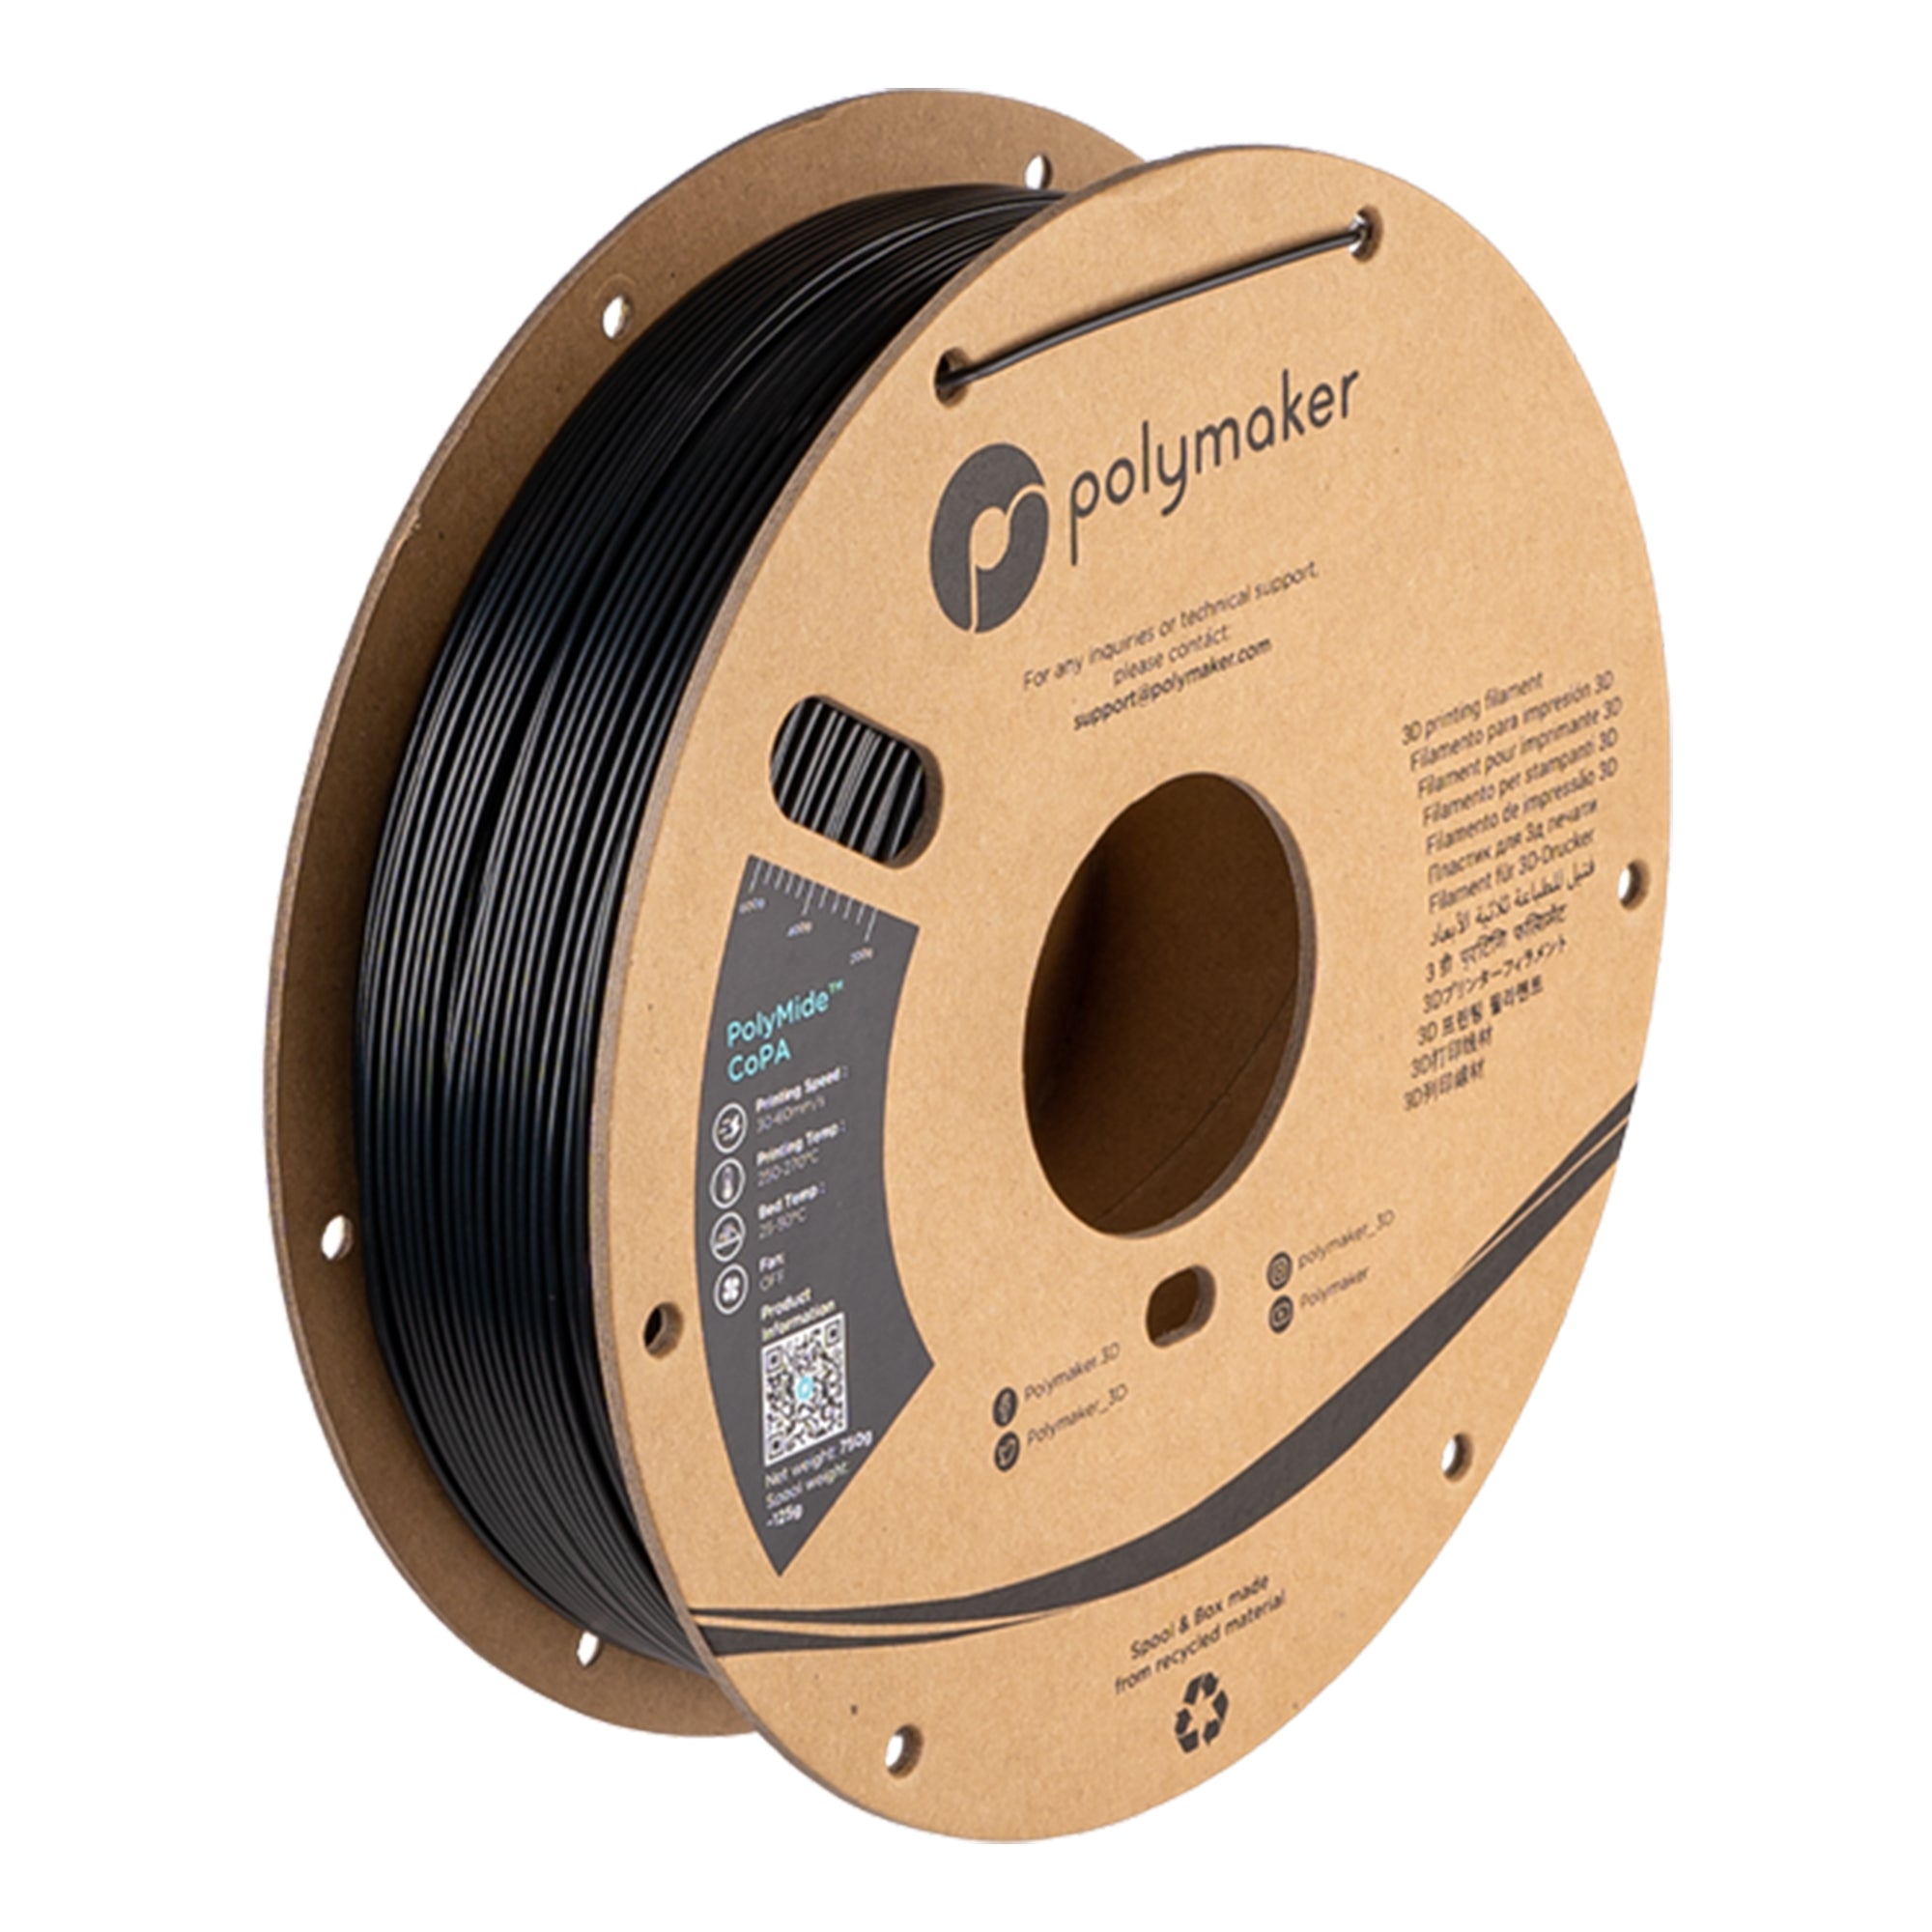 Polymaker PolyMide CoPA Nylon Black Filament 1.75mm 750g